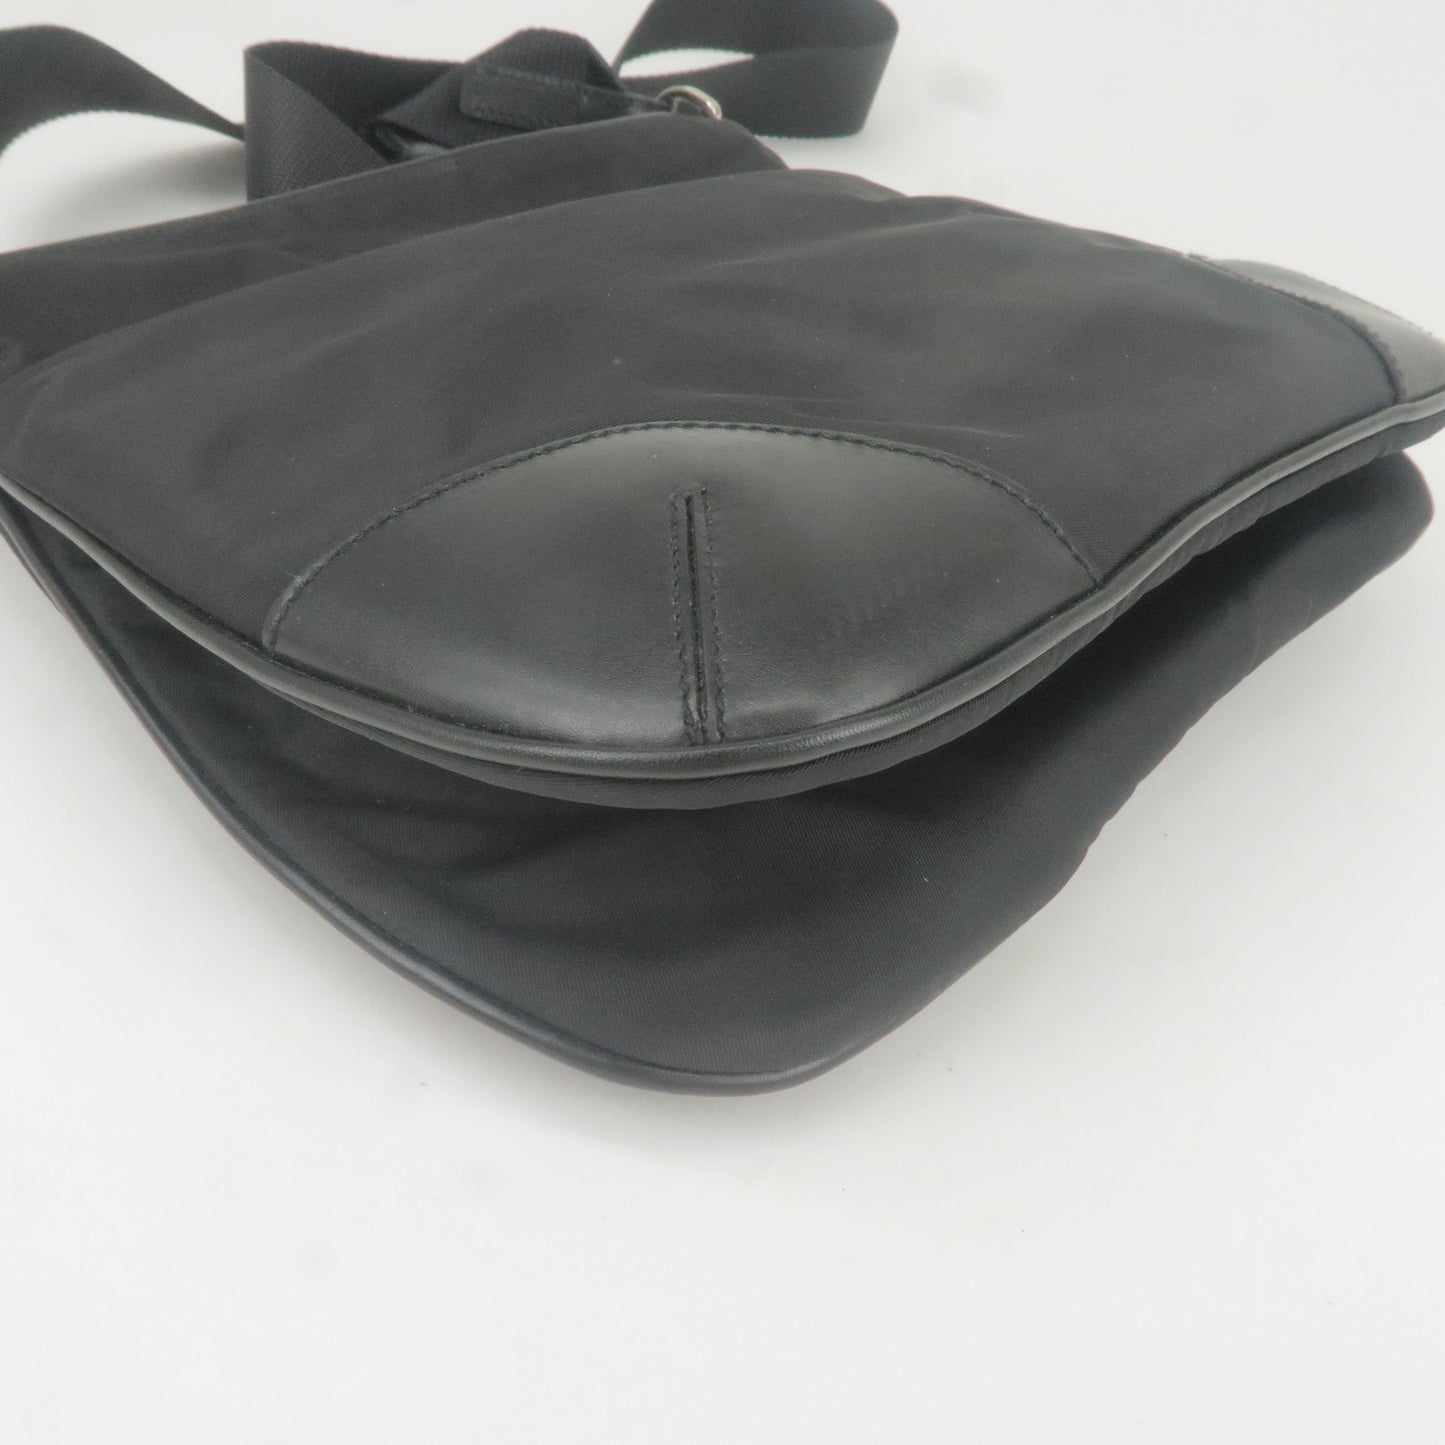 PRADA Logo Nylon Leather Shoulder Bag Purse NERO Black BT0332